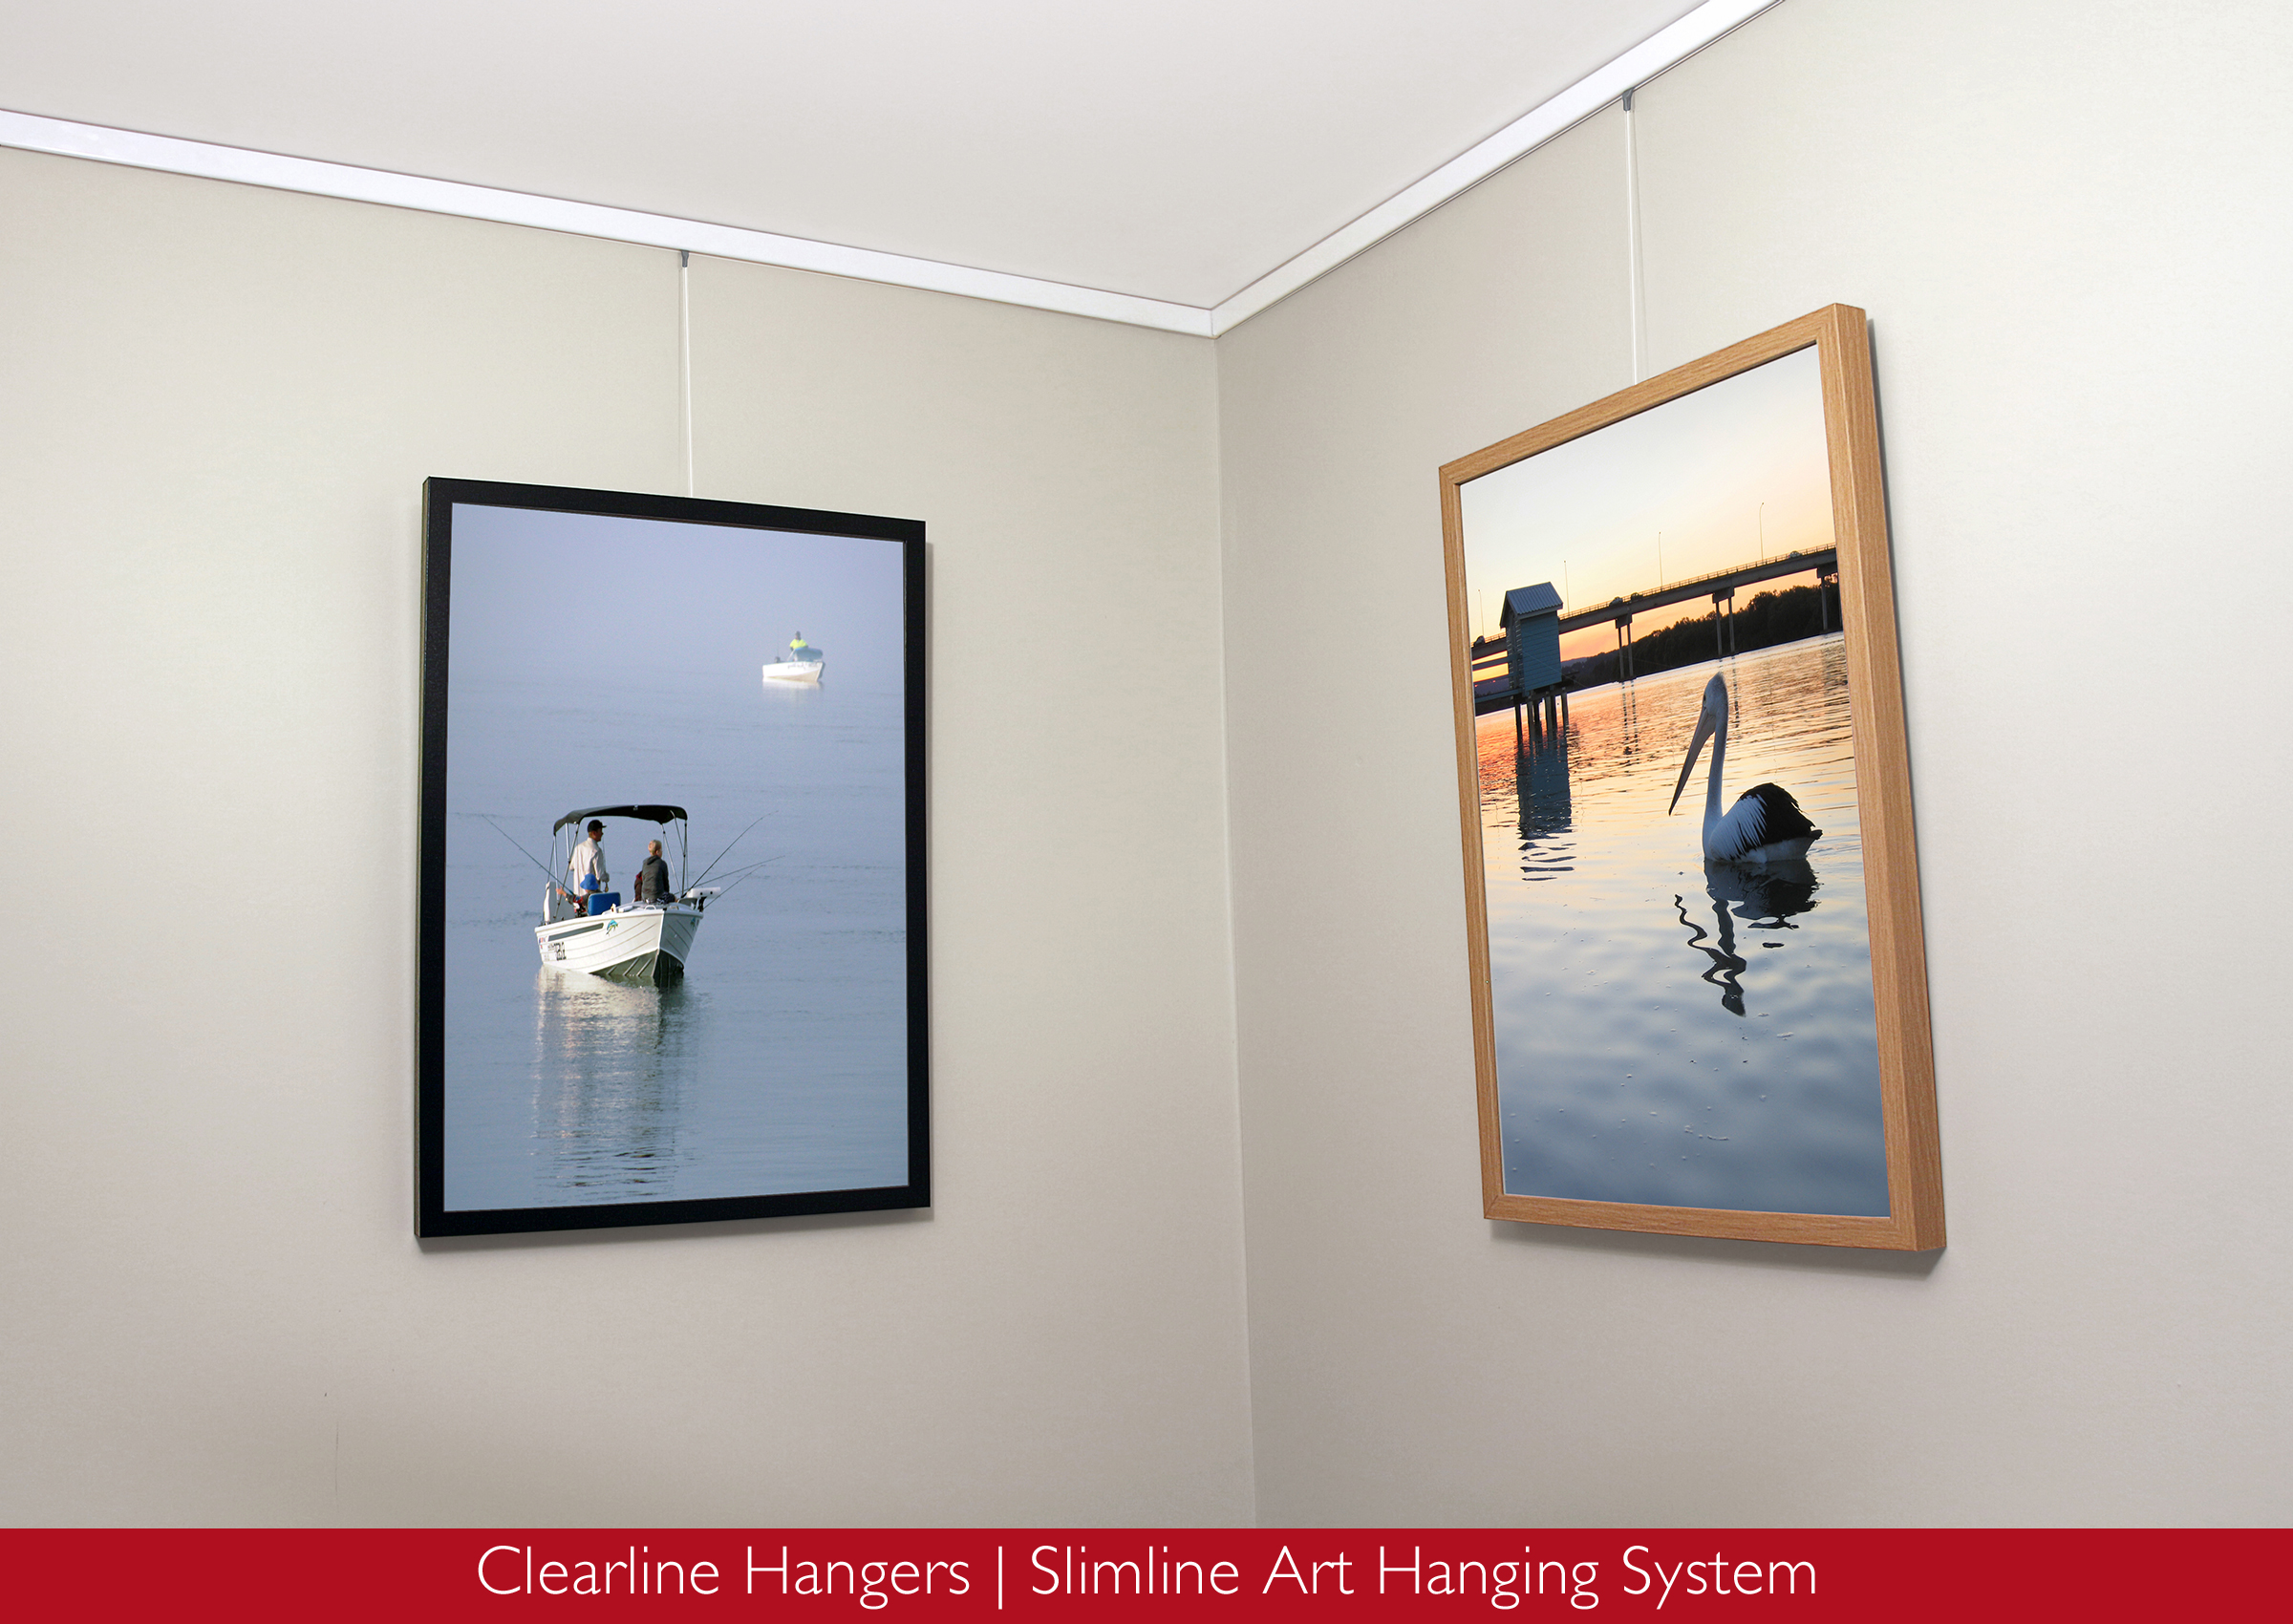 Slimline art hanging systems